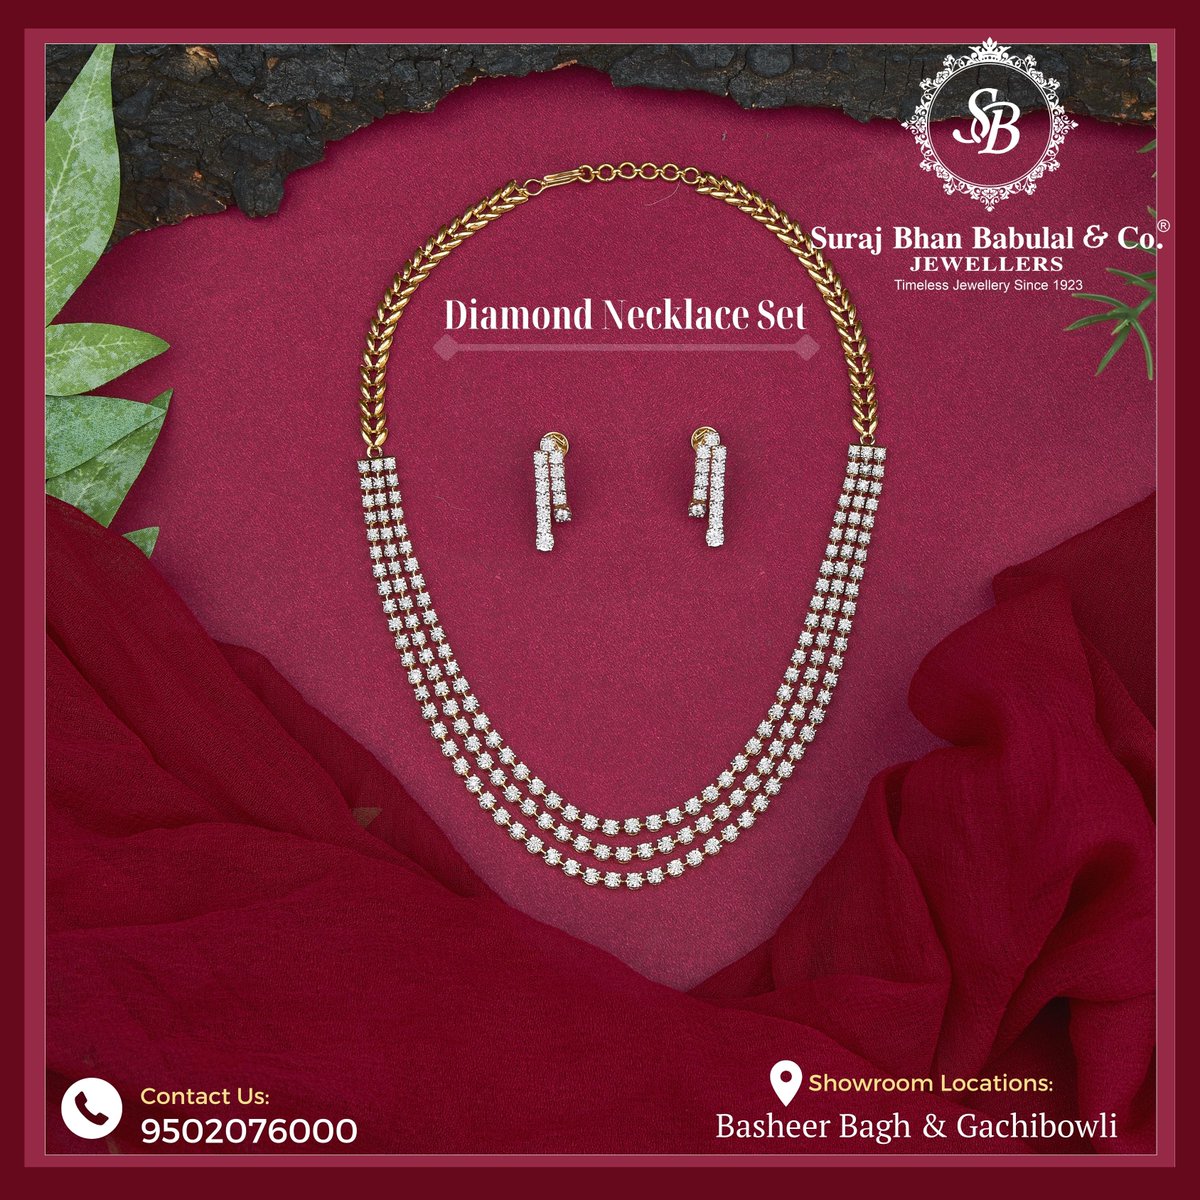 'Transform any occasion into a memorable affair with this radiant diamond necklace set✨💎✨. Sparkle like never before.'
For inquiries please contact - 9502076000 #JewelryLove #DiamondLover #DiamondsAreForever #surajbhangachibowli #surajbhanjewelleryhub #diamondnecklaceset